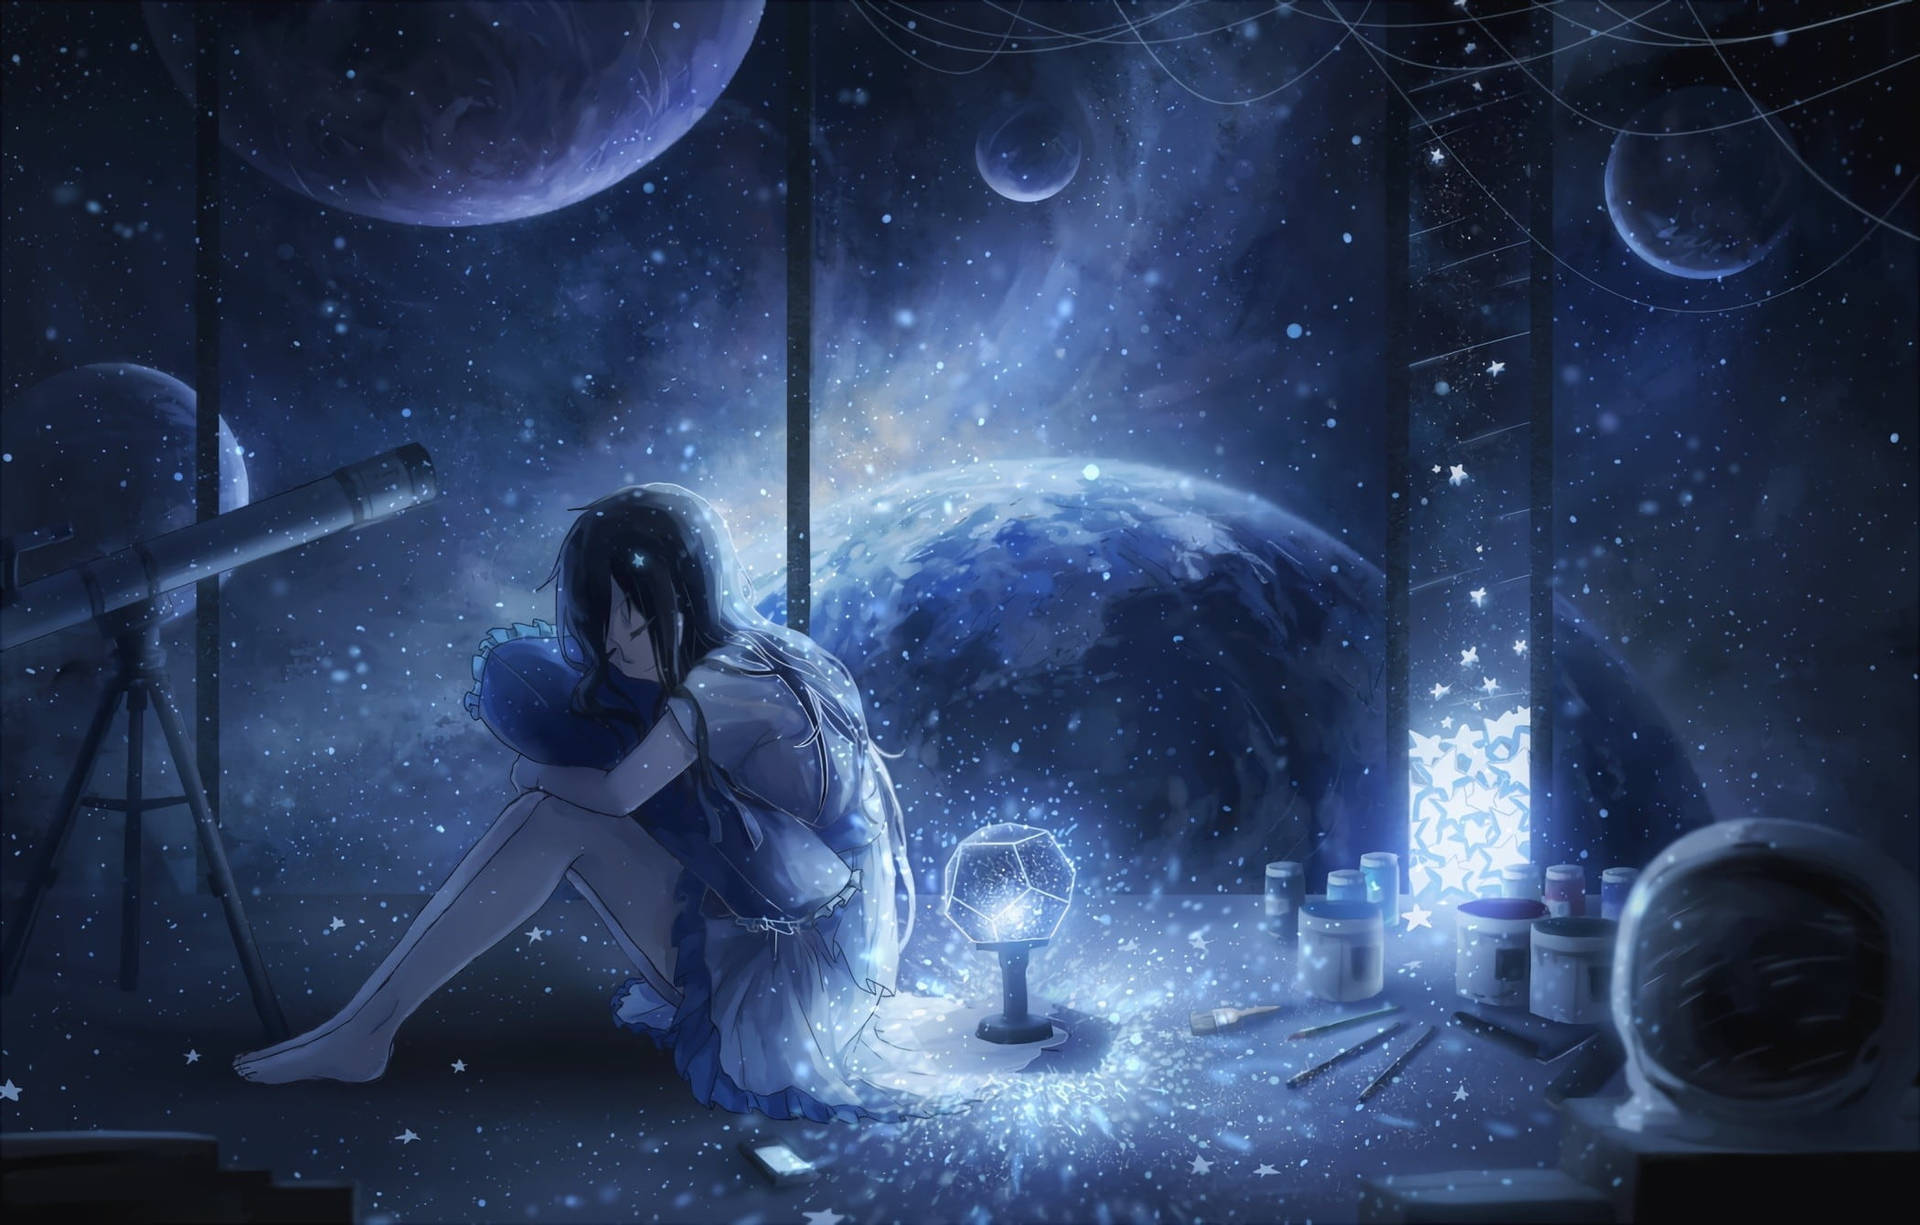 Aesthetic Sad Anime Girl Galaxy Background